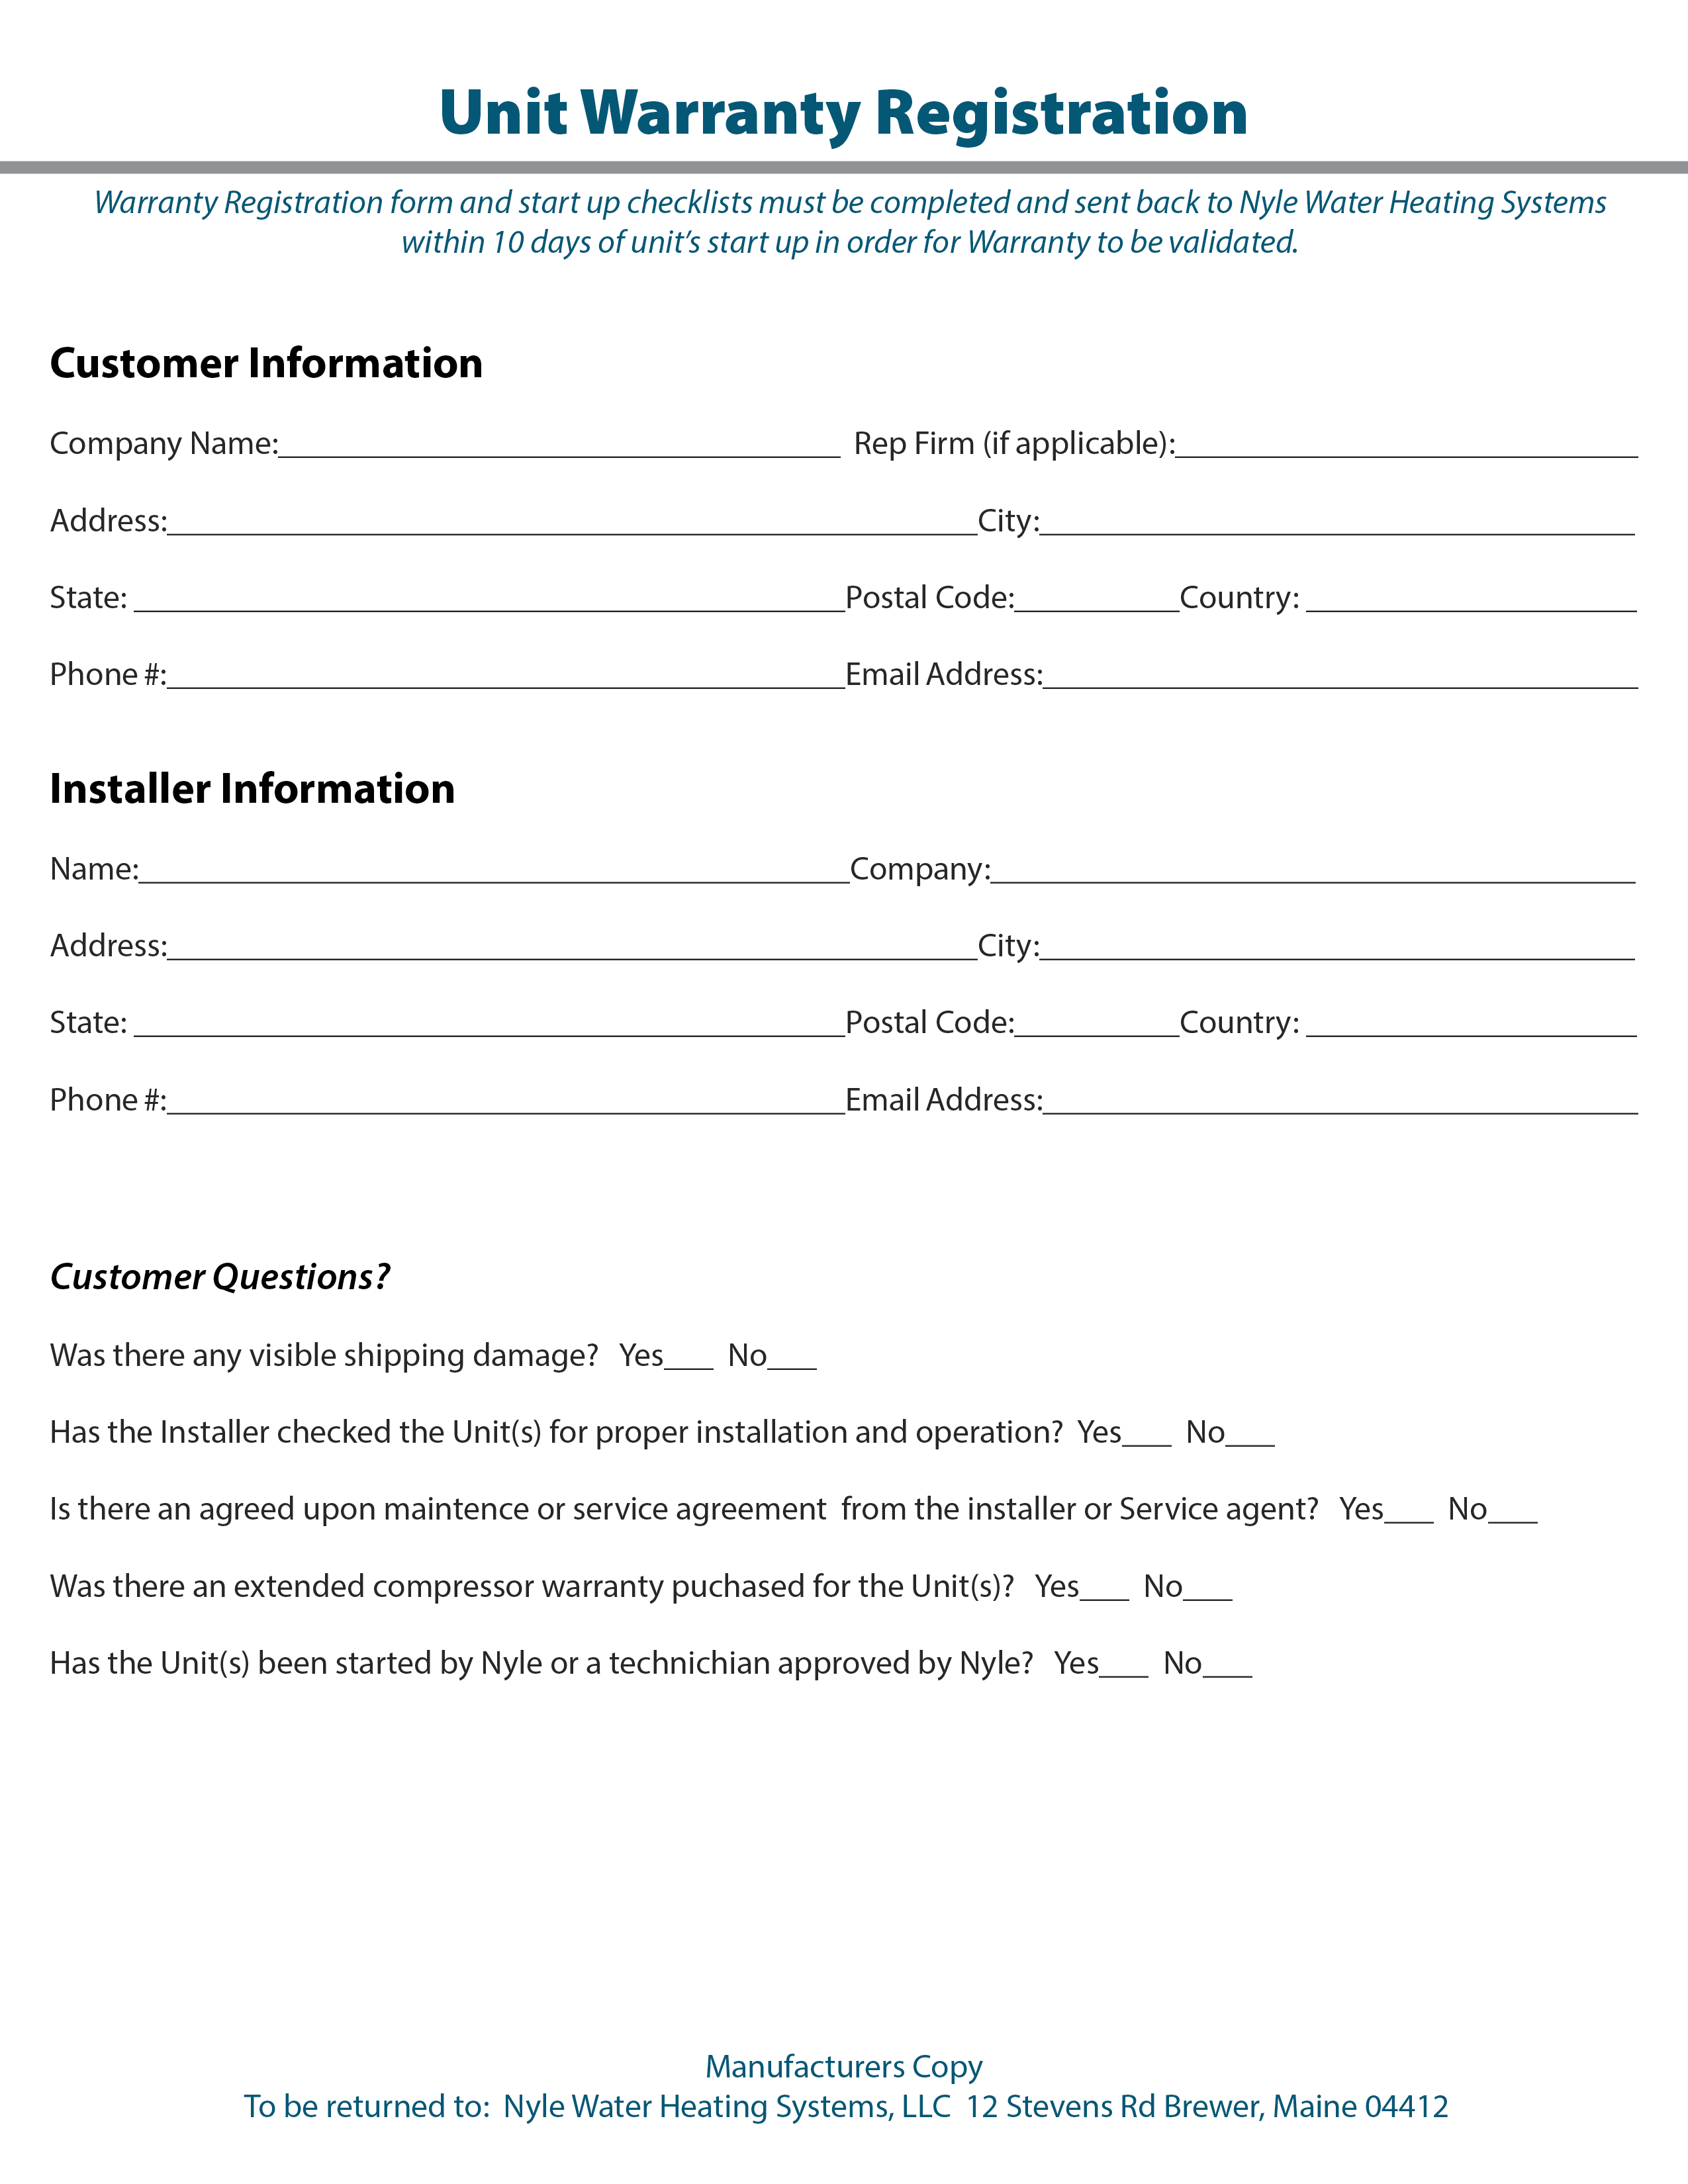 Unit Warranty Registration Form